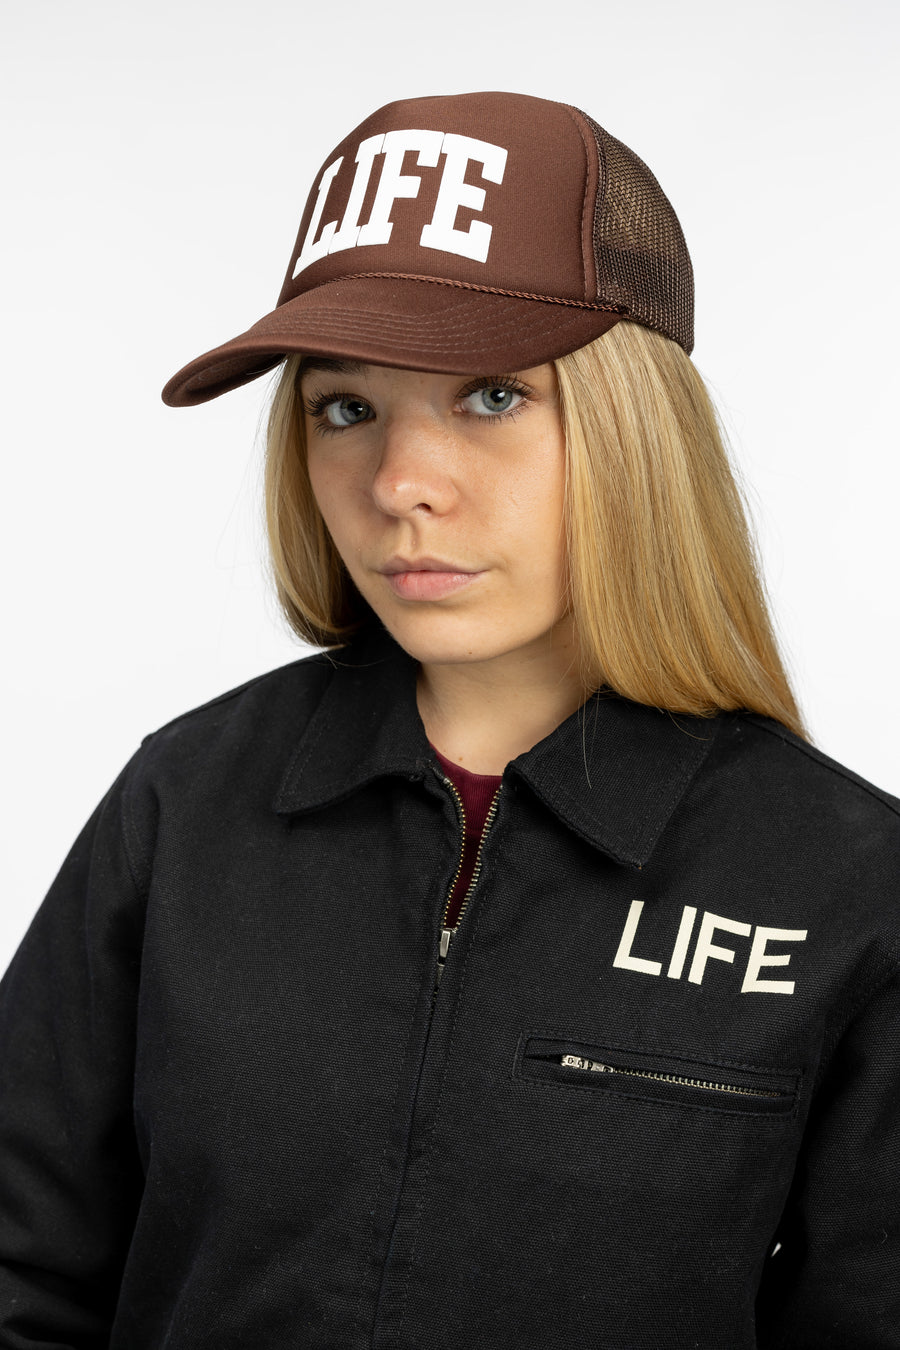 Life Trucker Hat